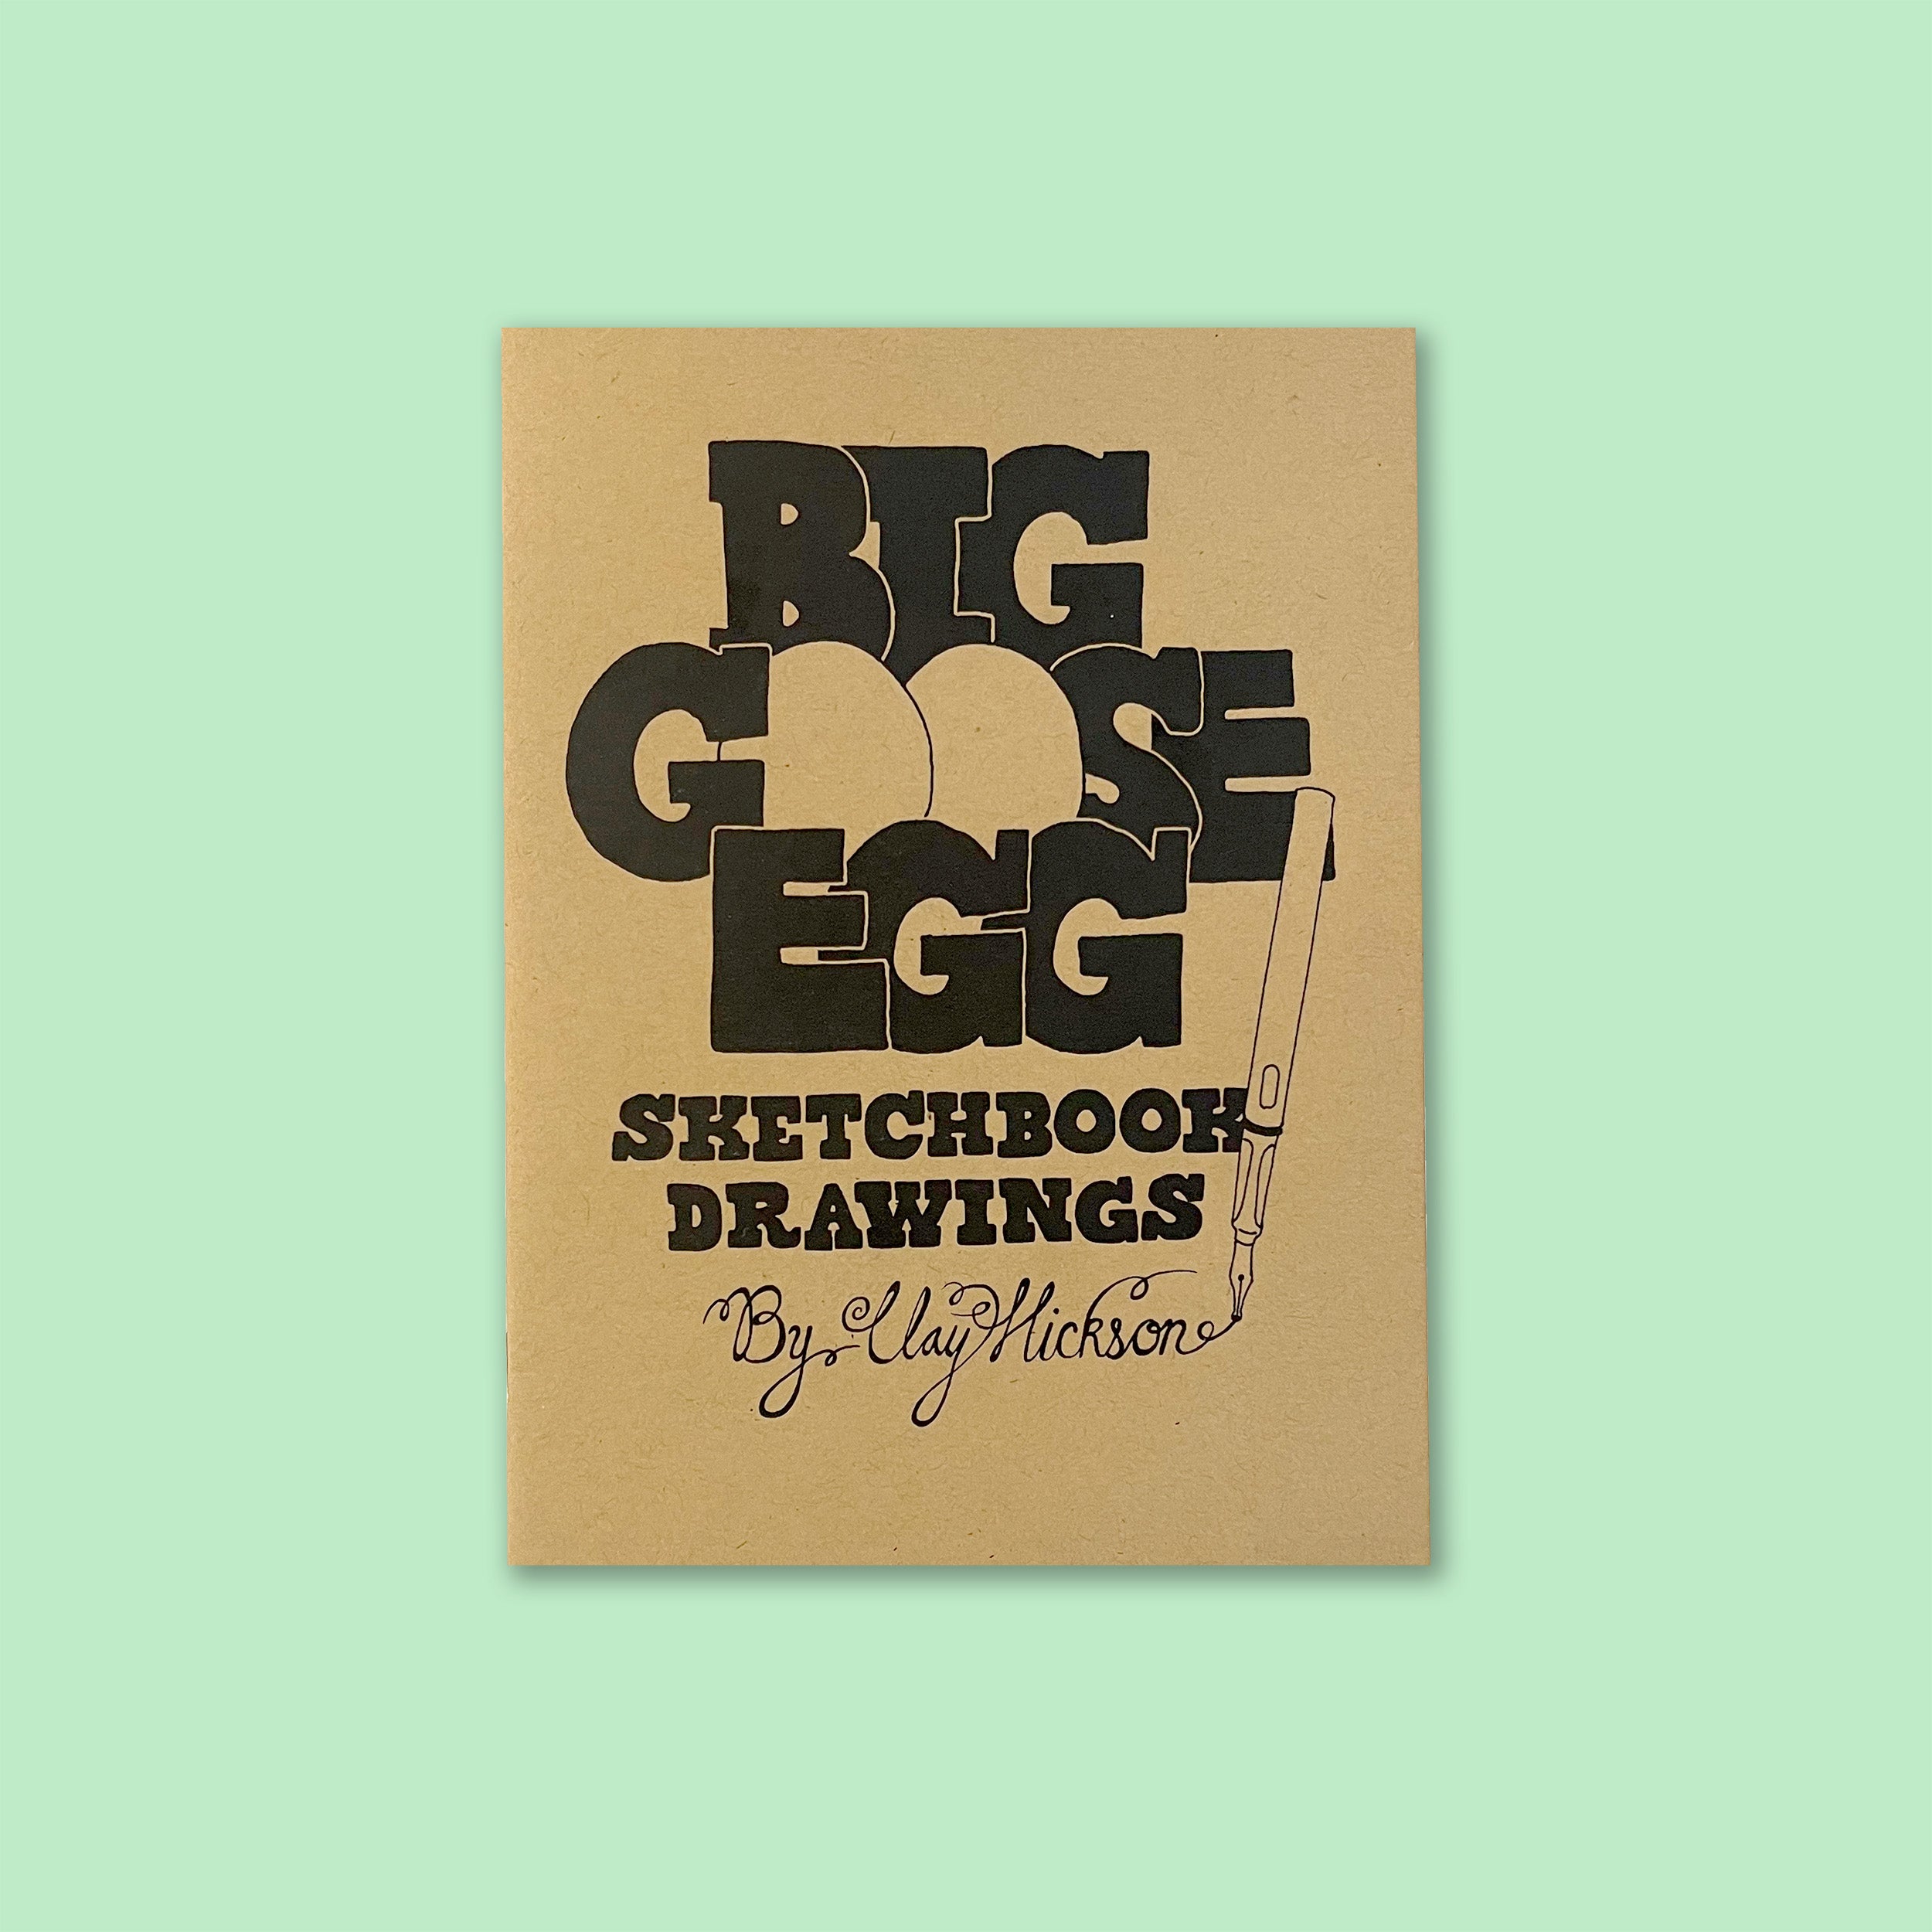 BIG GOOSE EGG by Clay Hickson